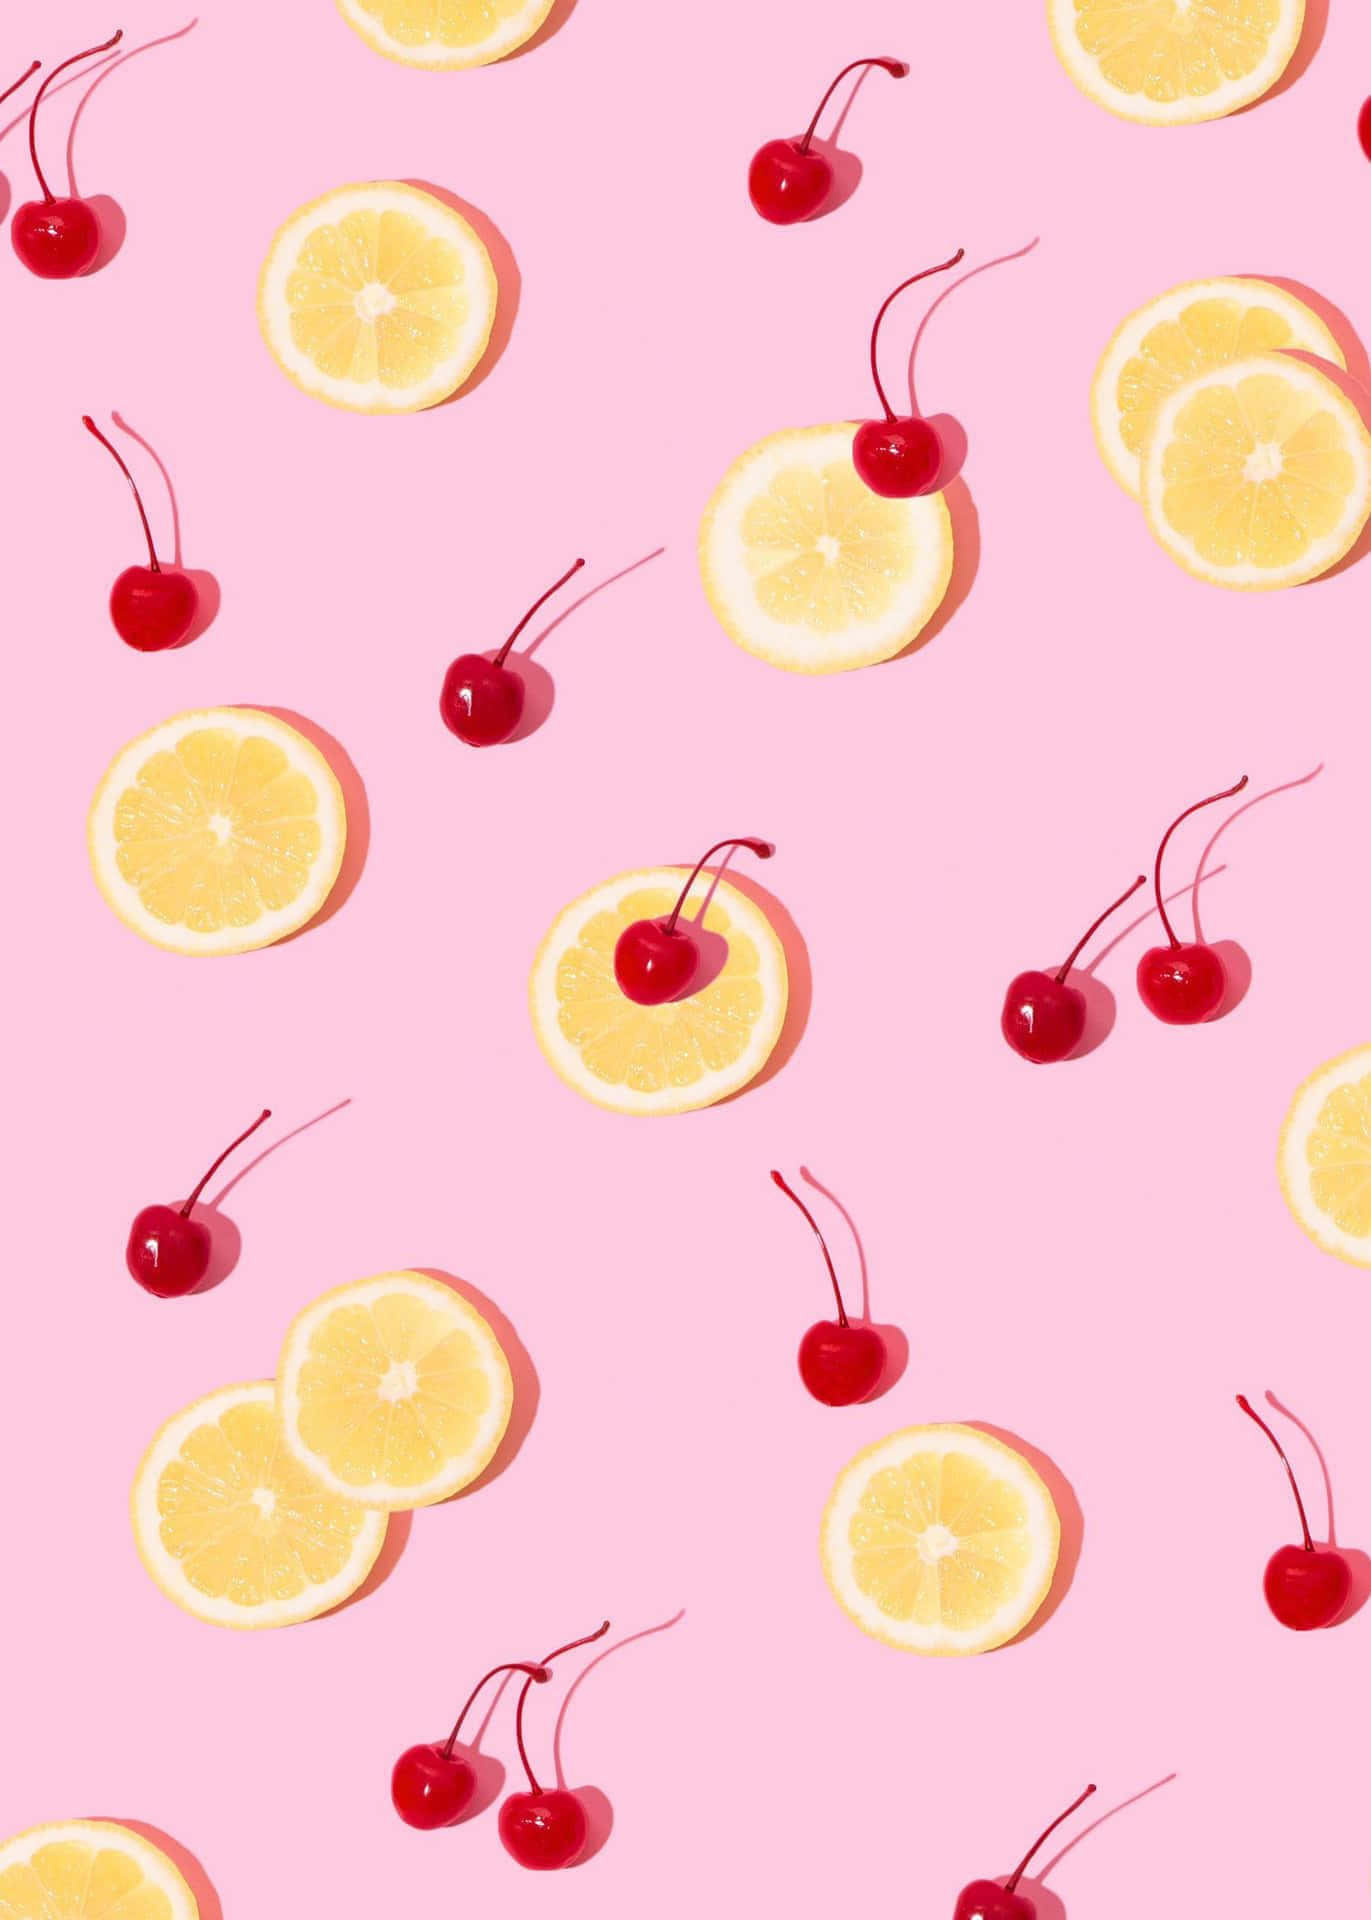 Lemonand Cherries Patternon Pink